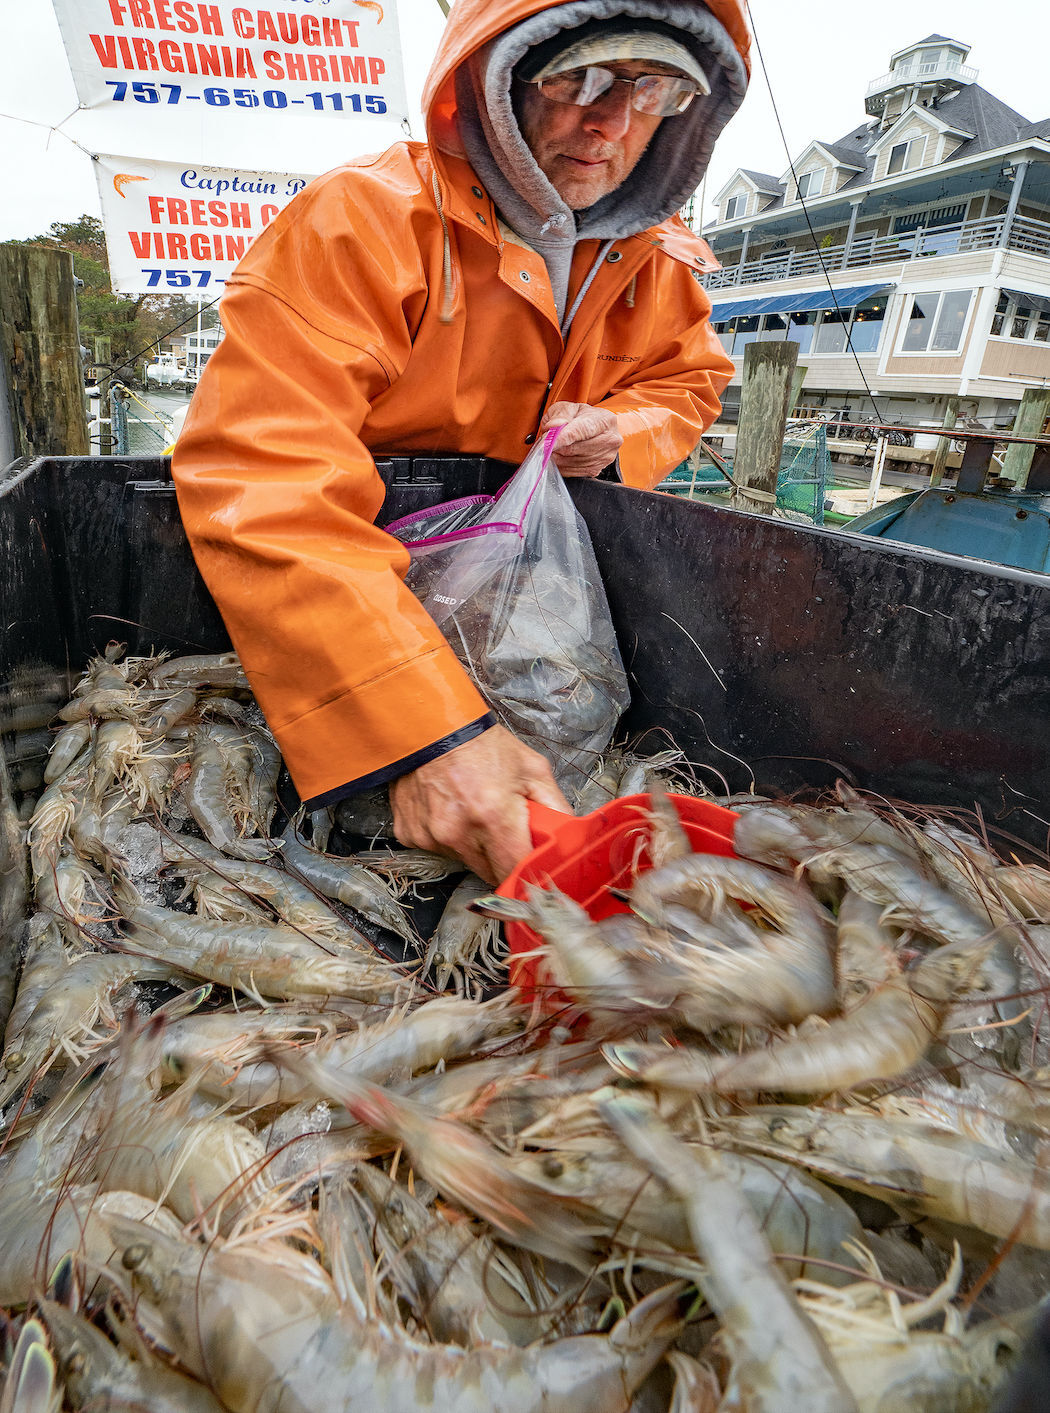 Warm temperatures move more shrimp into Chesapeake waters